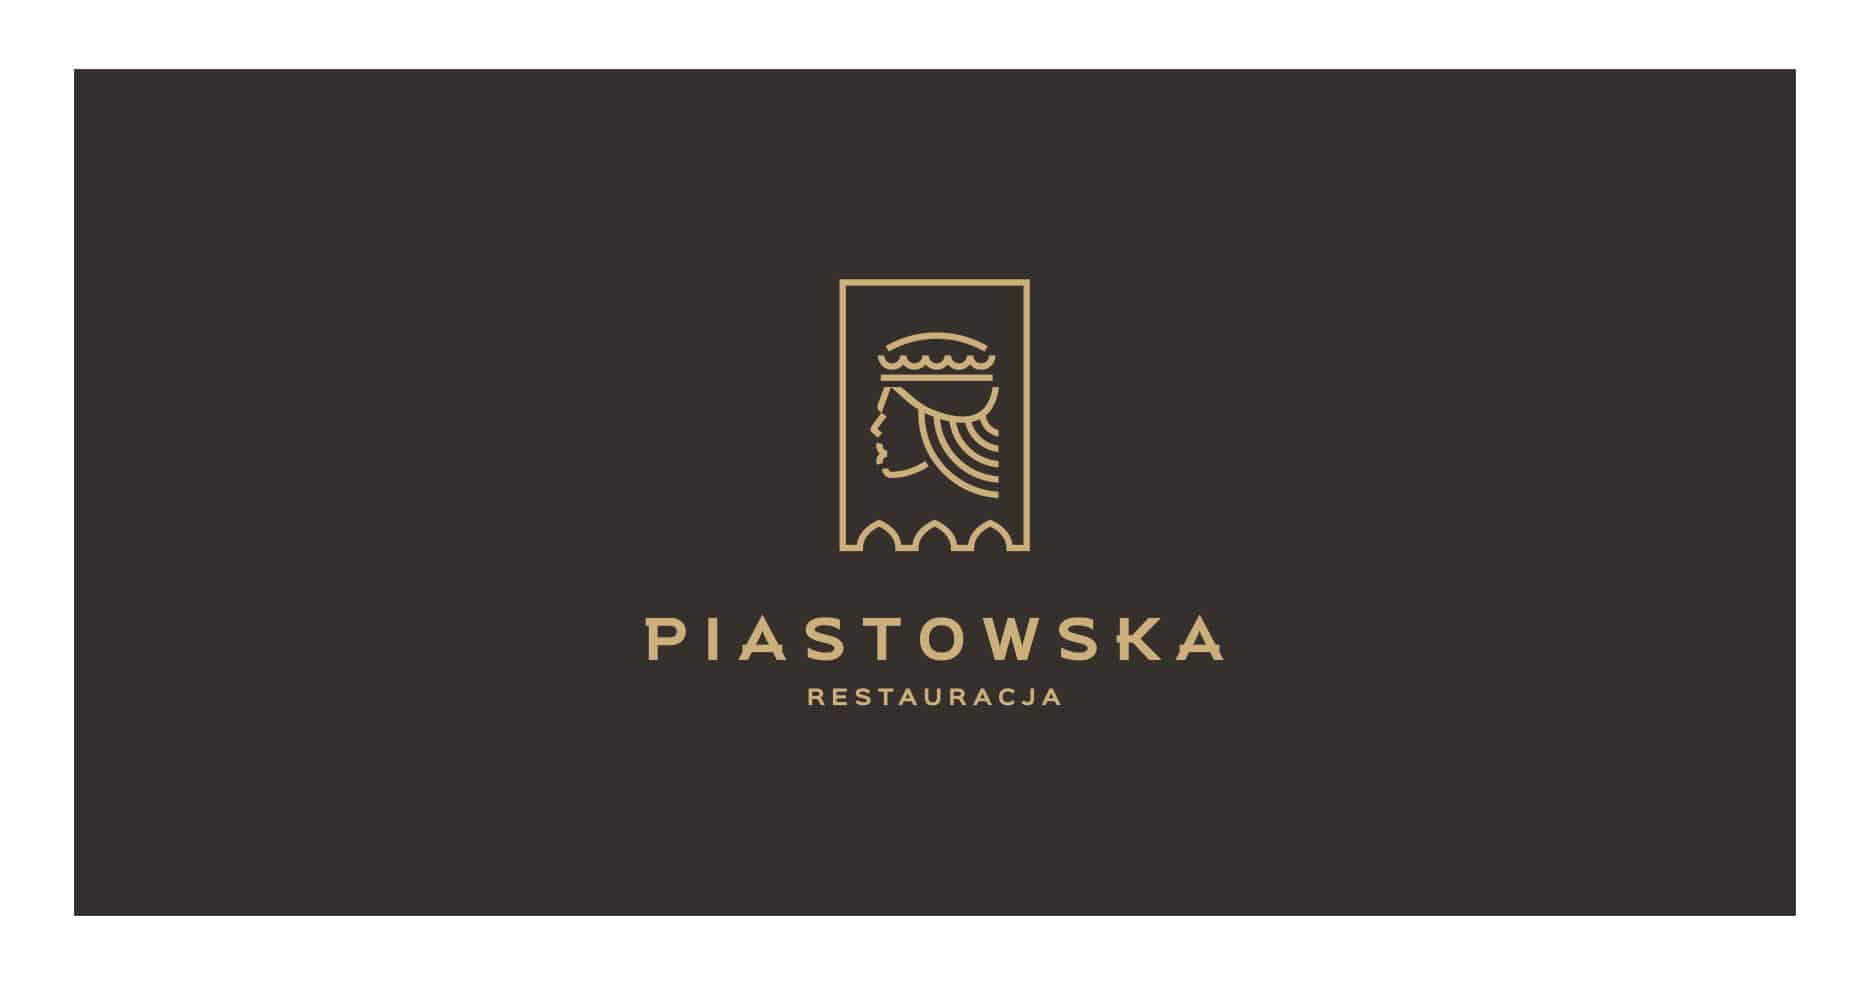 Piastowska restauracja logo